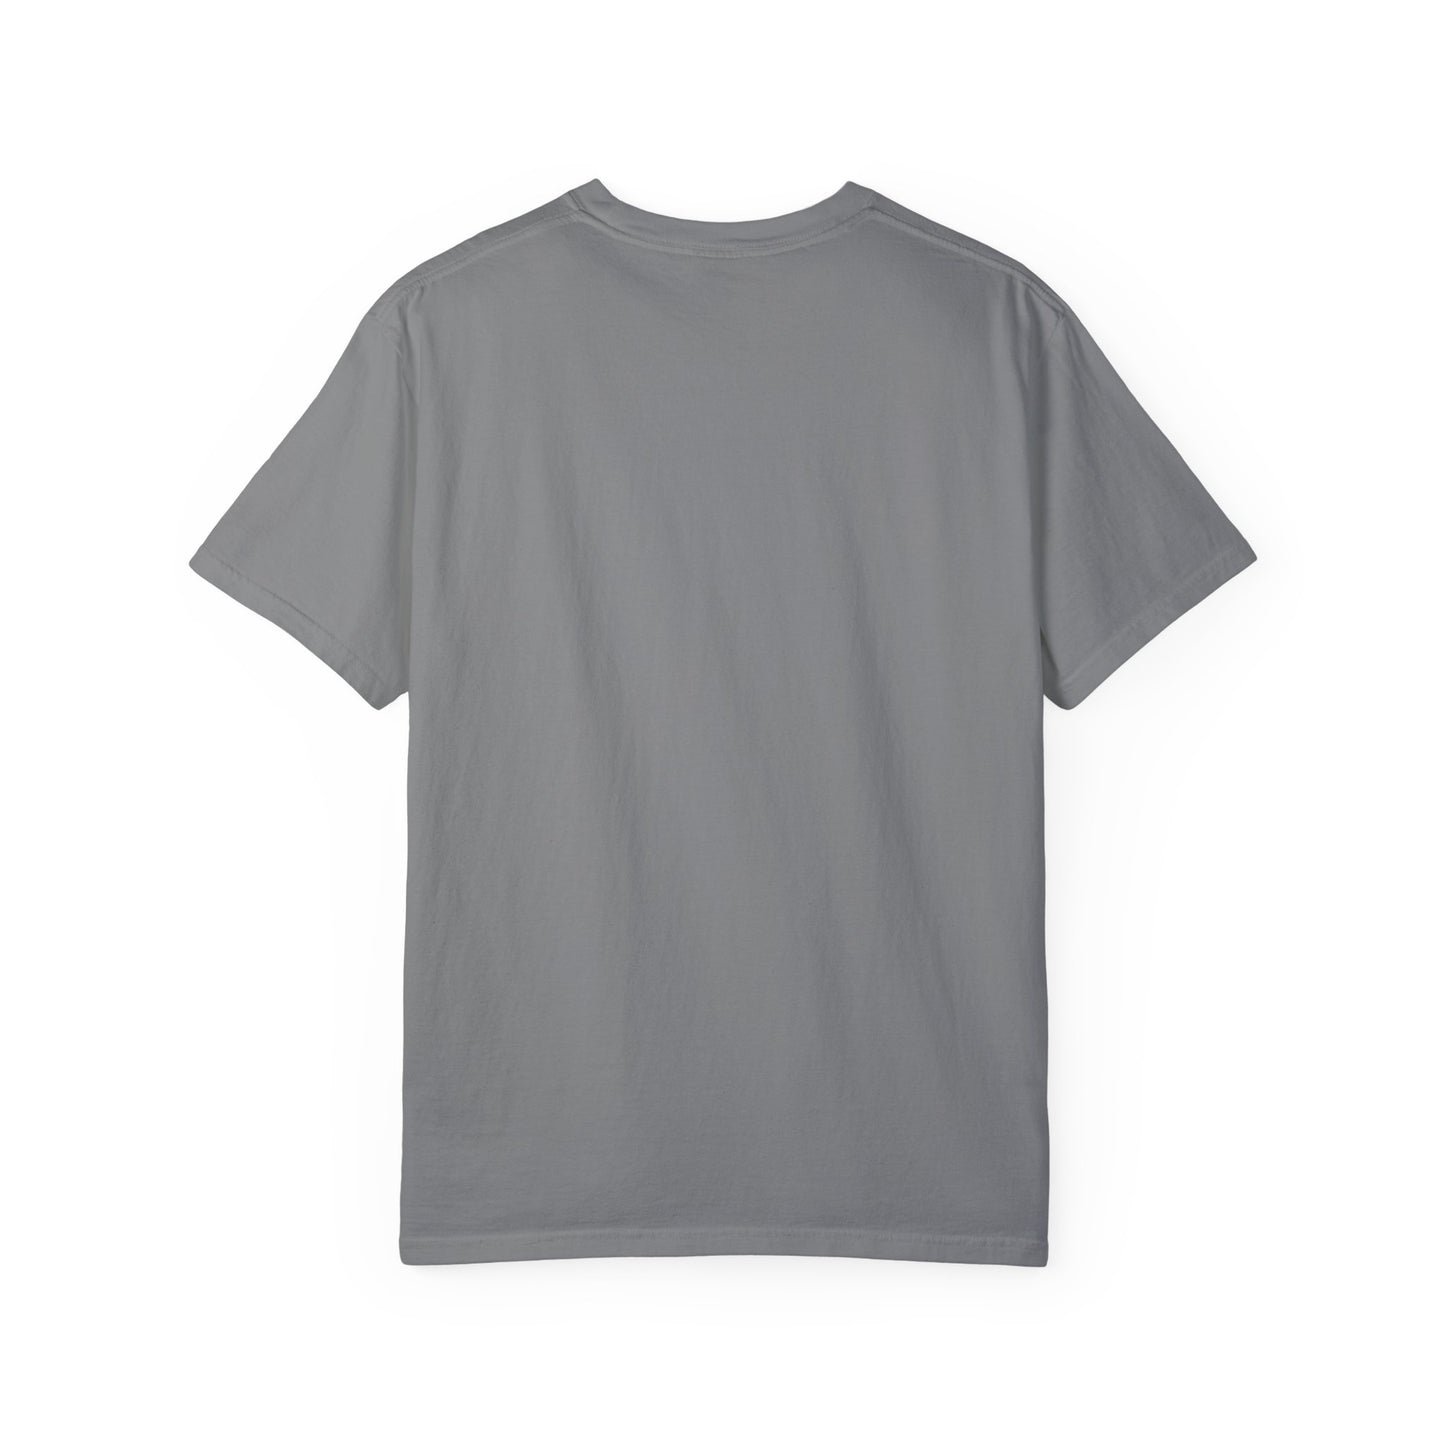 Hell Yeah Unisex Garment-Dyed T-shirt